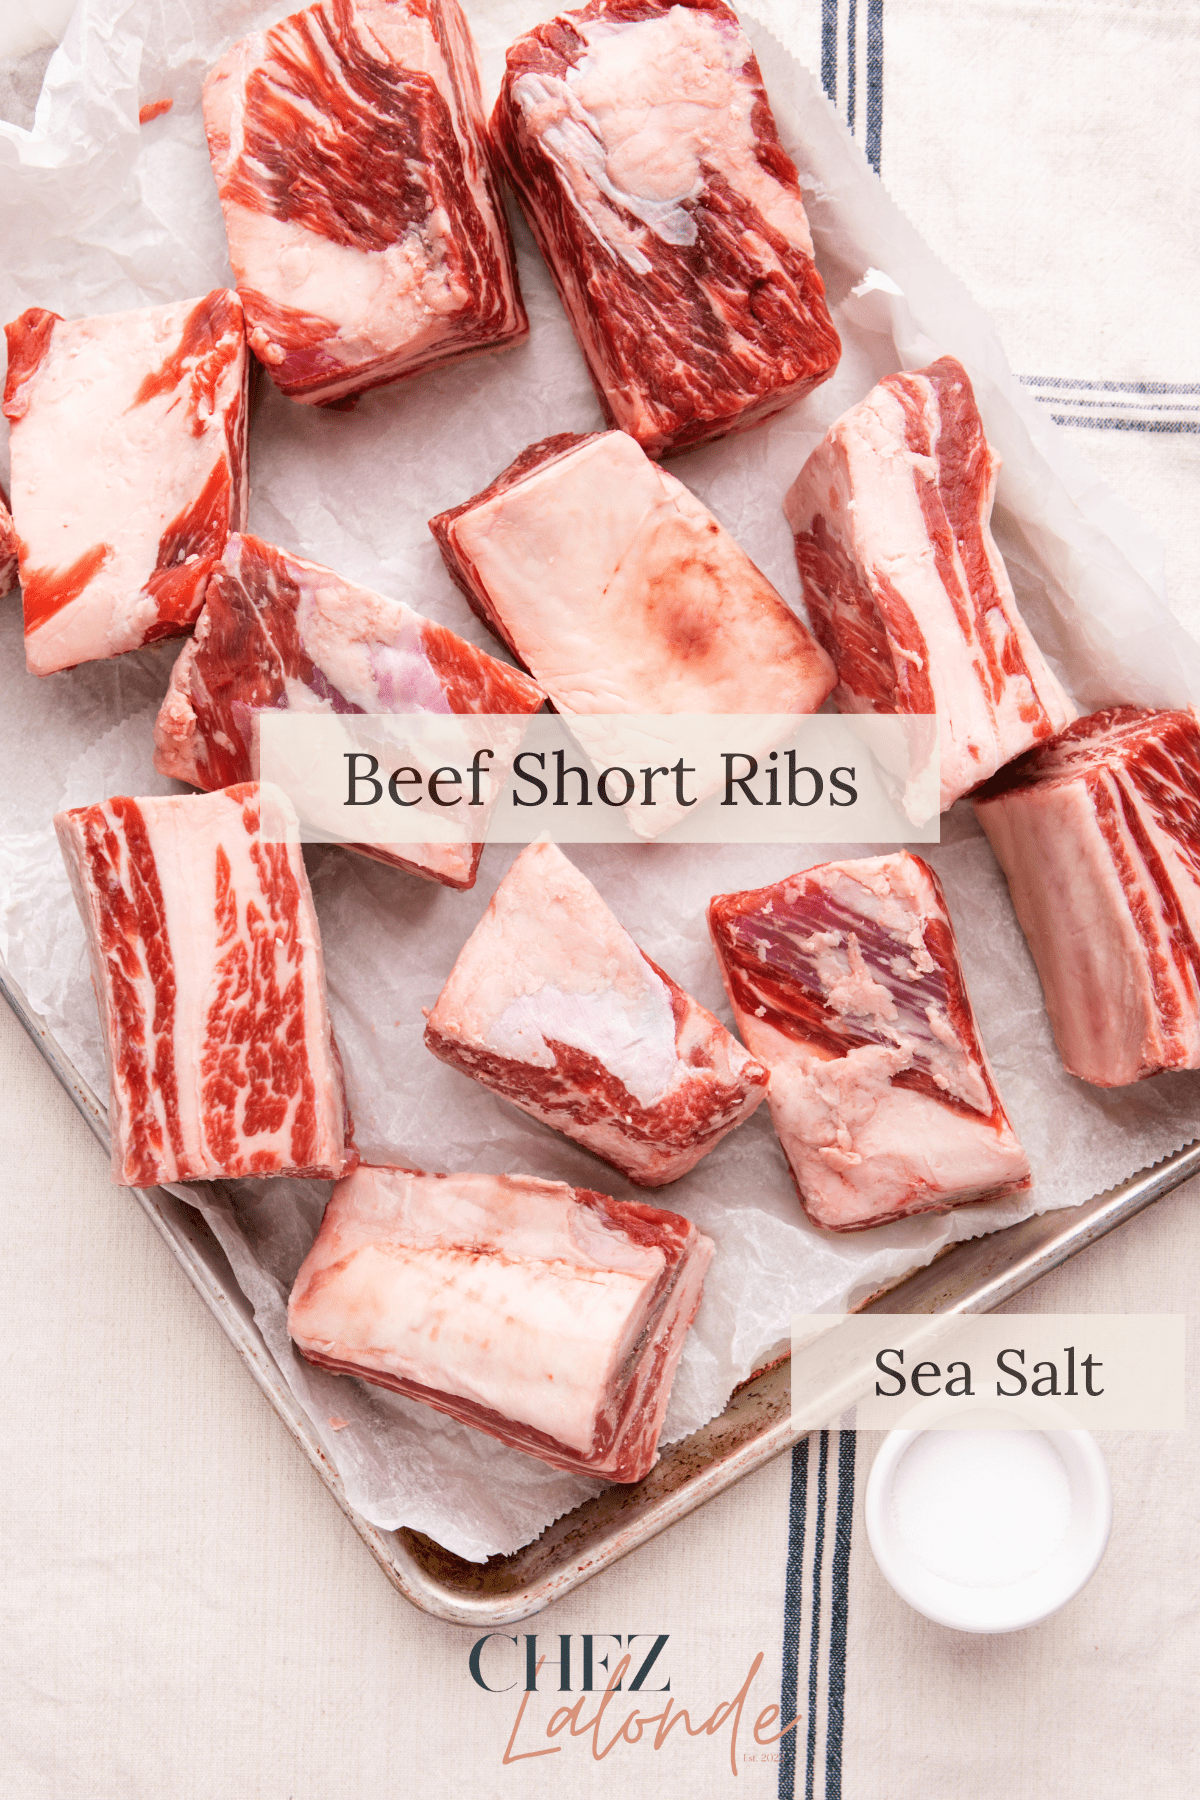 Short ribs and sea salt